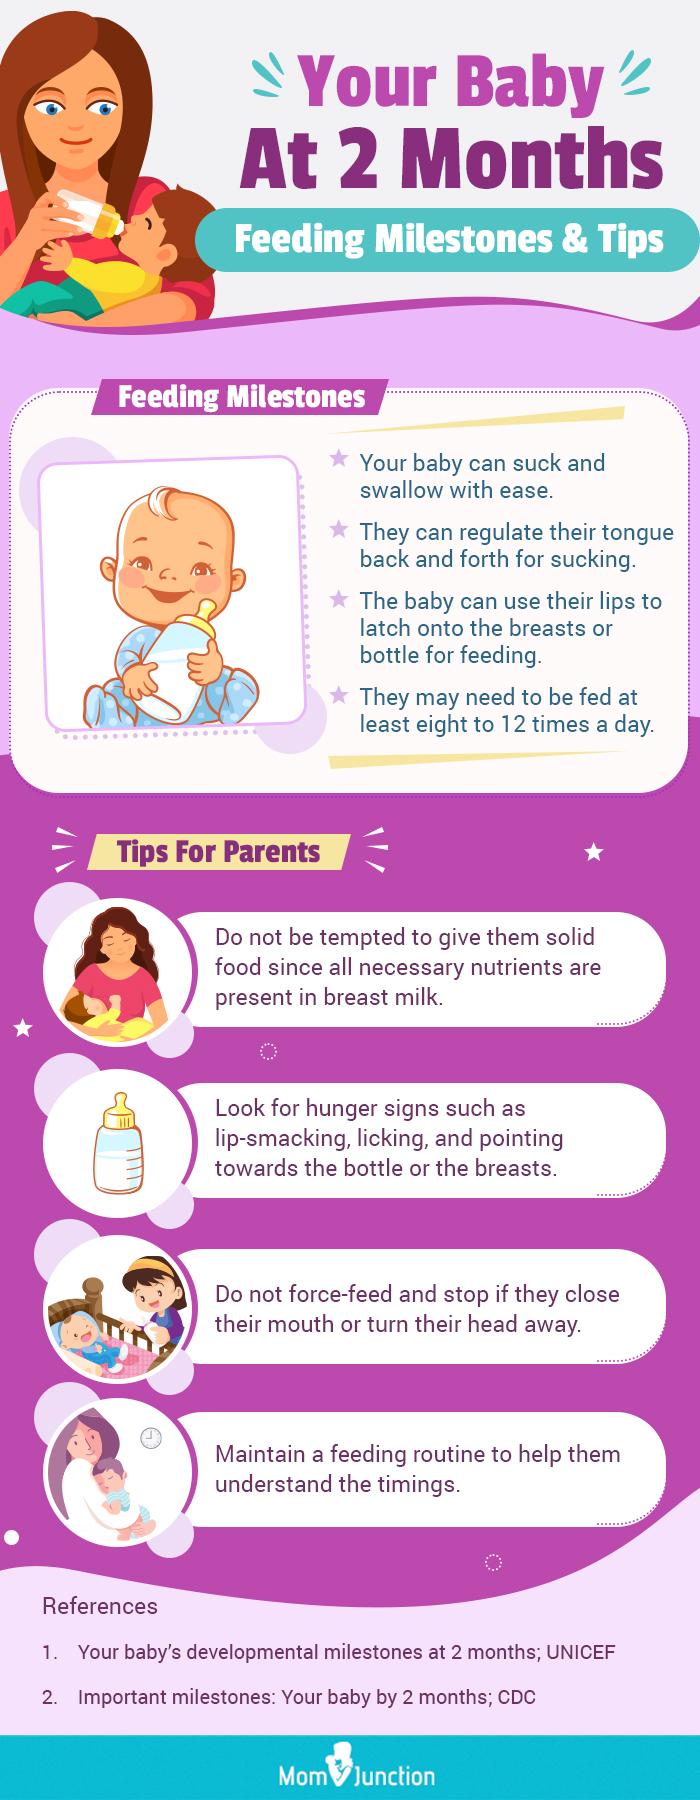 https://cdn2.momjunction.com/wp-content/uploads/2014/10/Your-Baby-At-2-Months--Feeding-Milestones-Tips.jpg